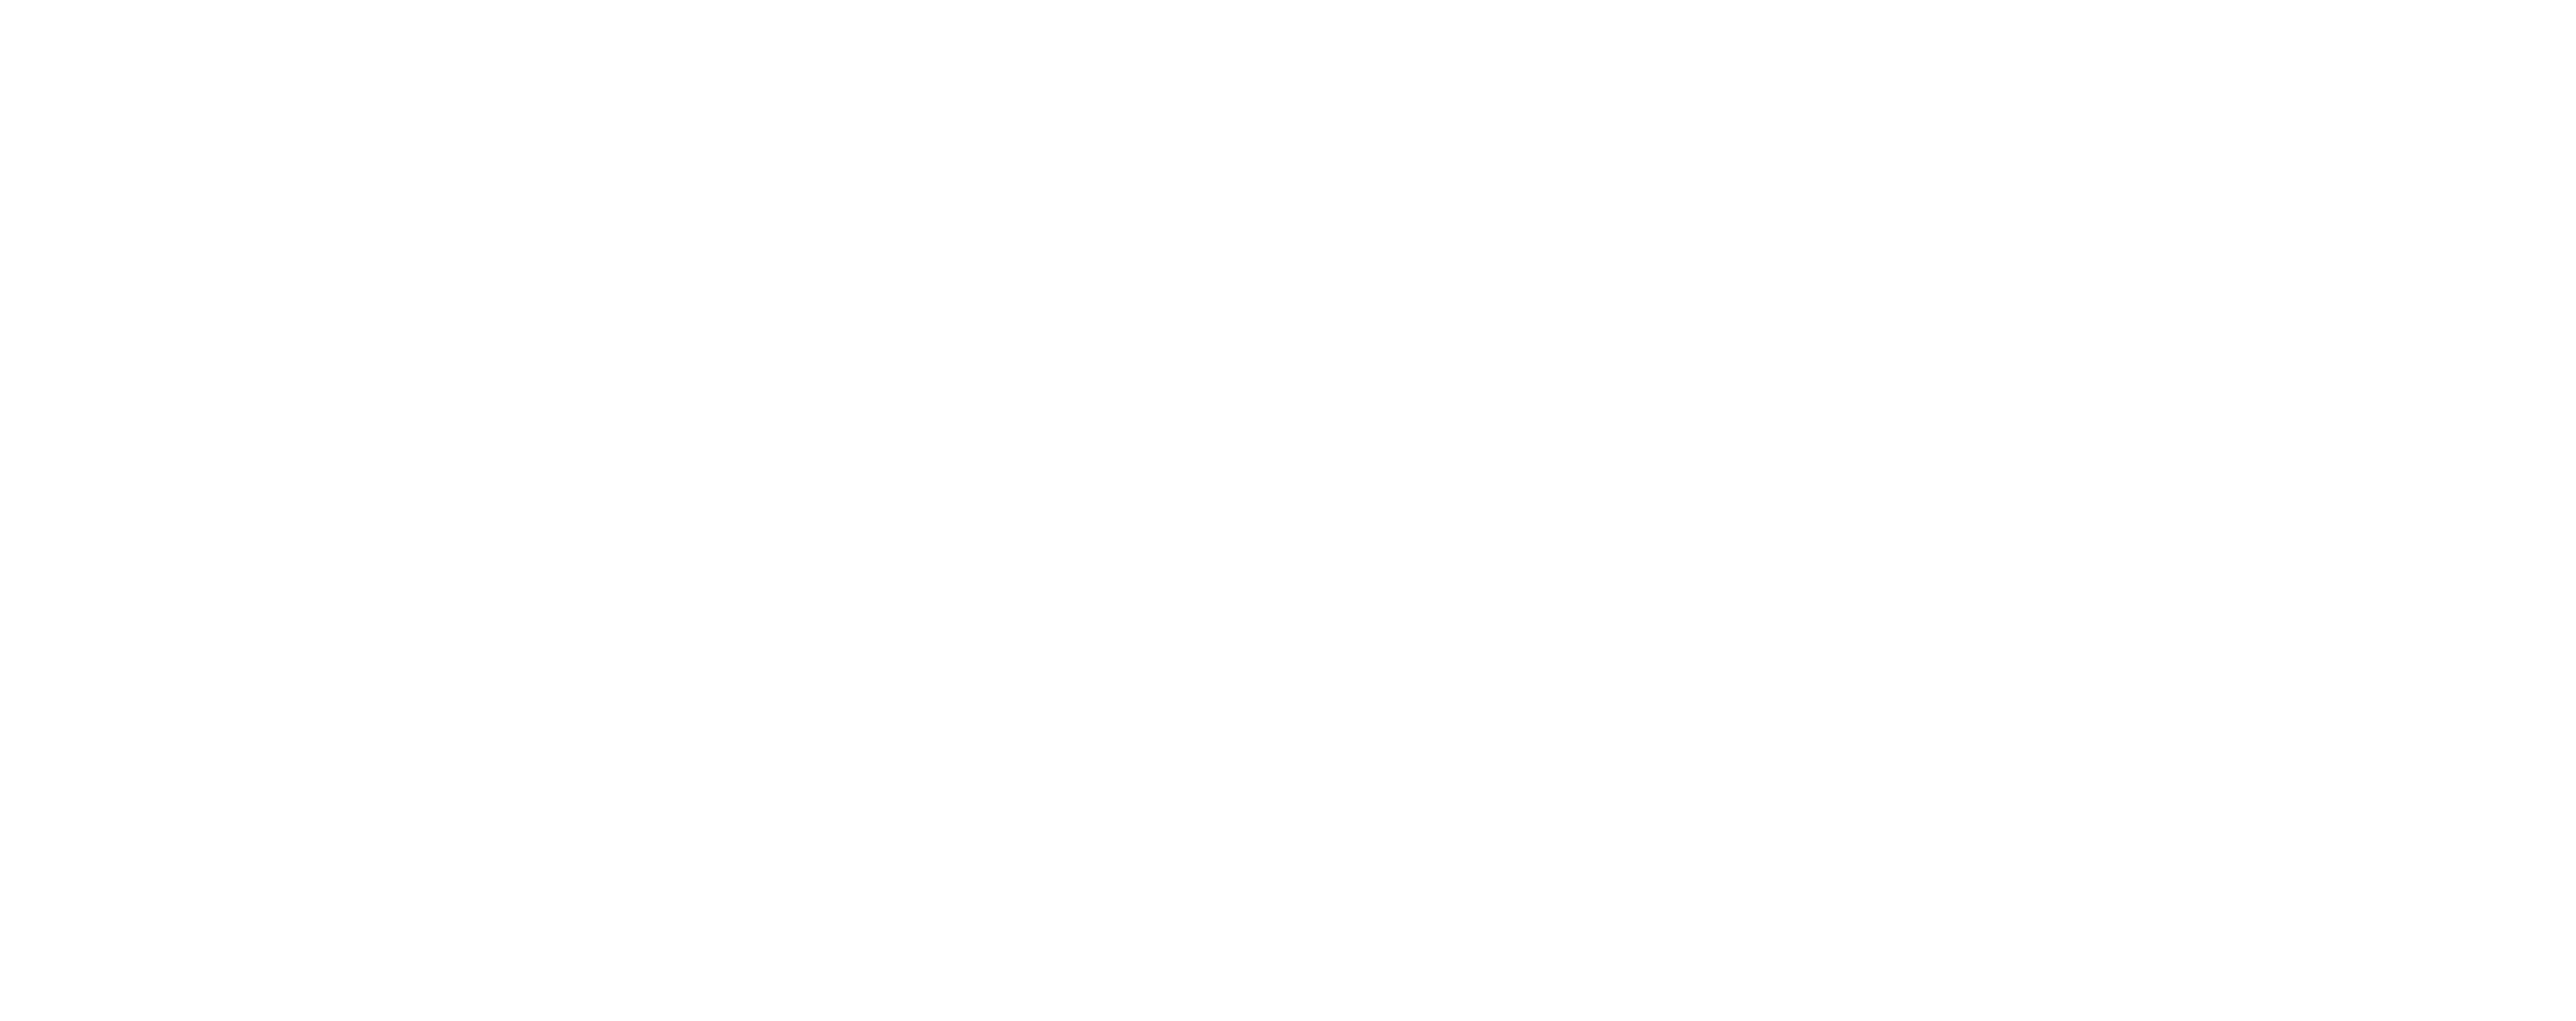 Staunton Harold Hall